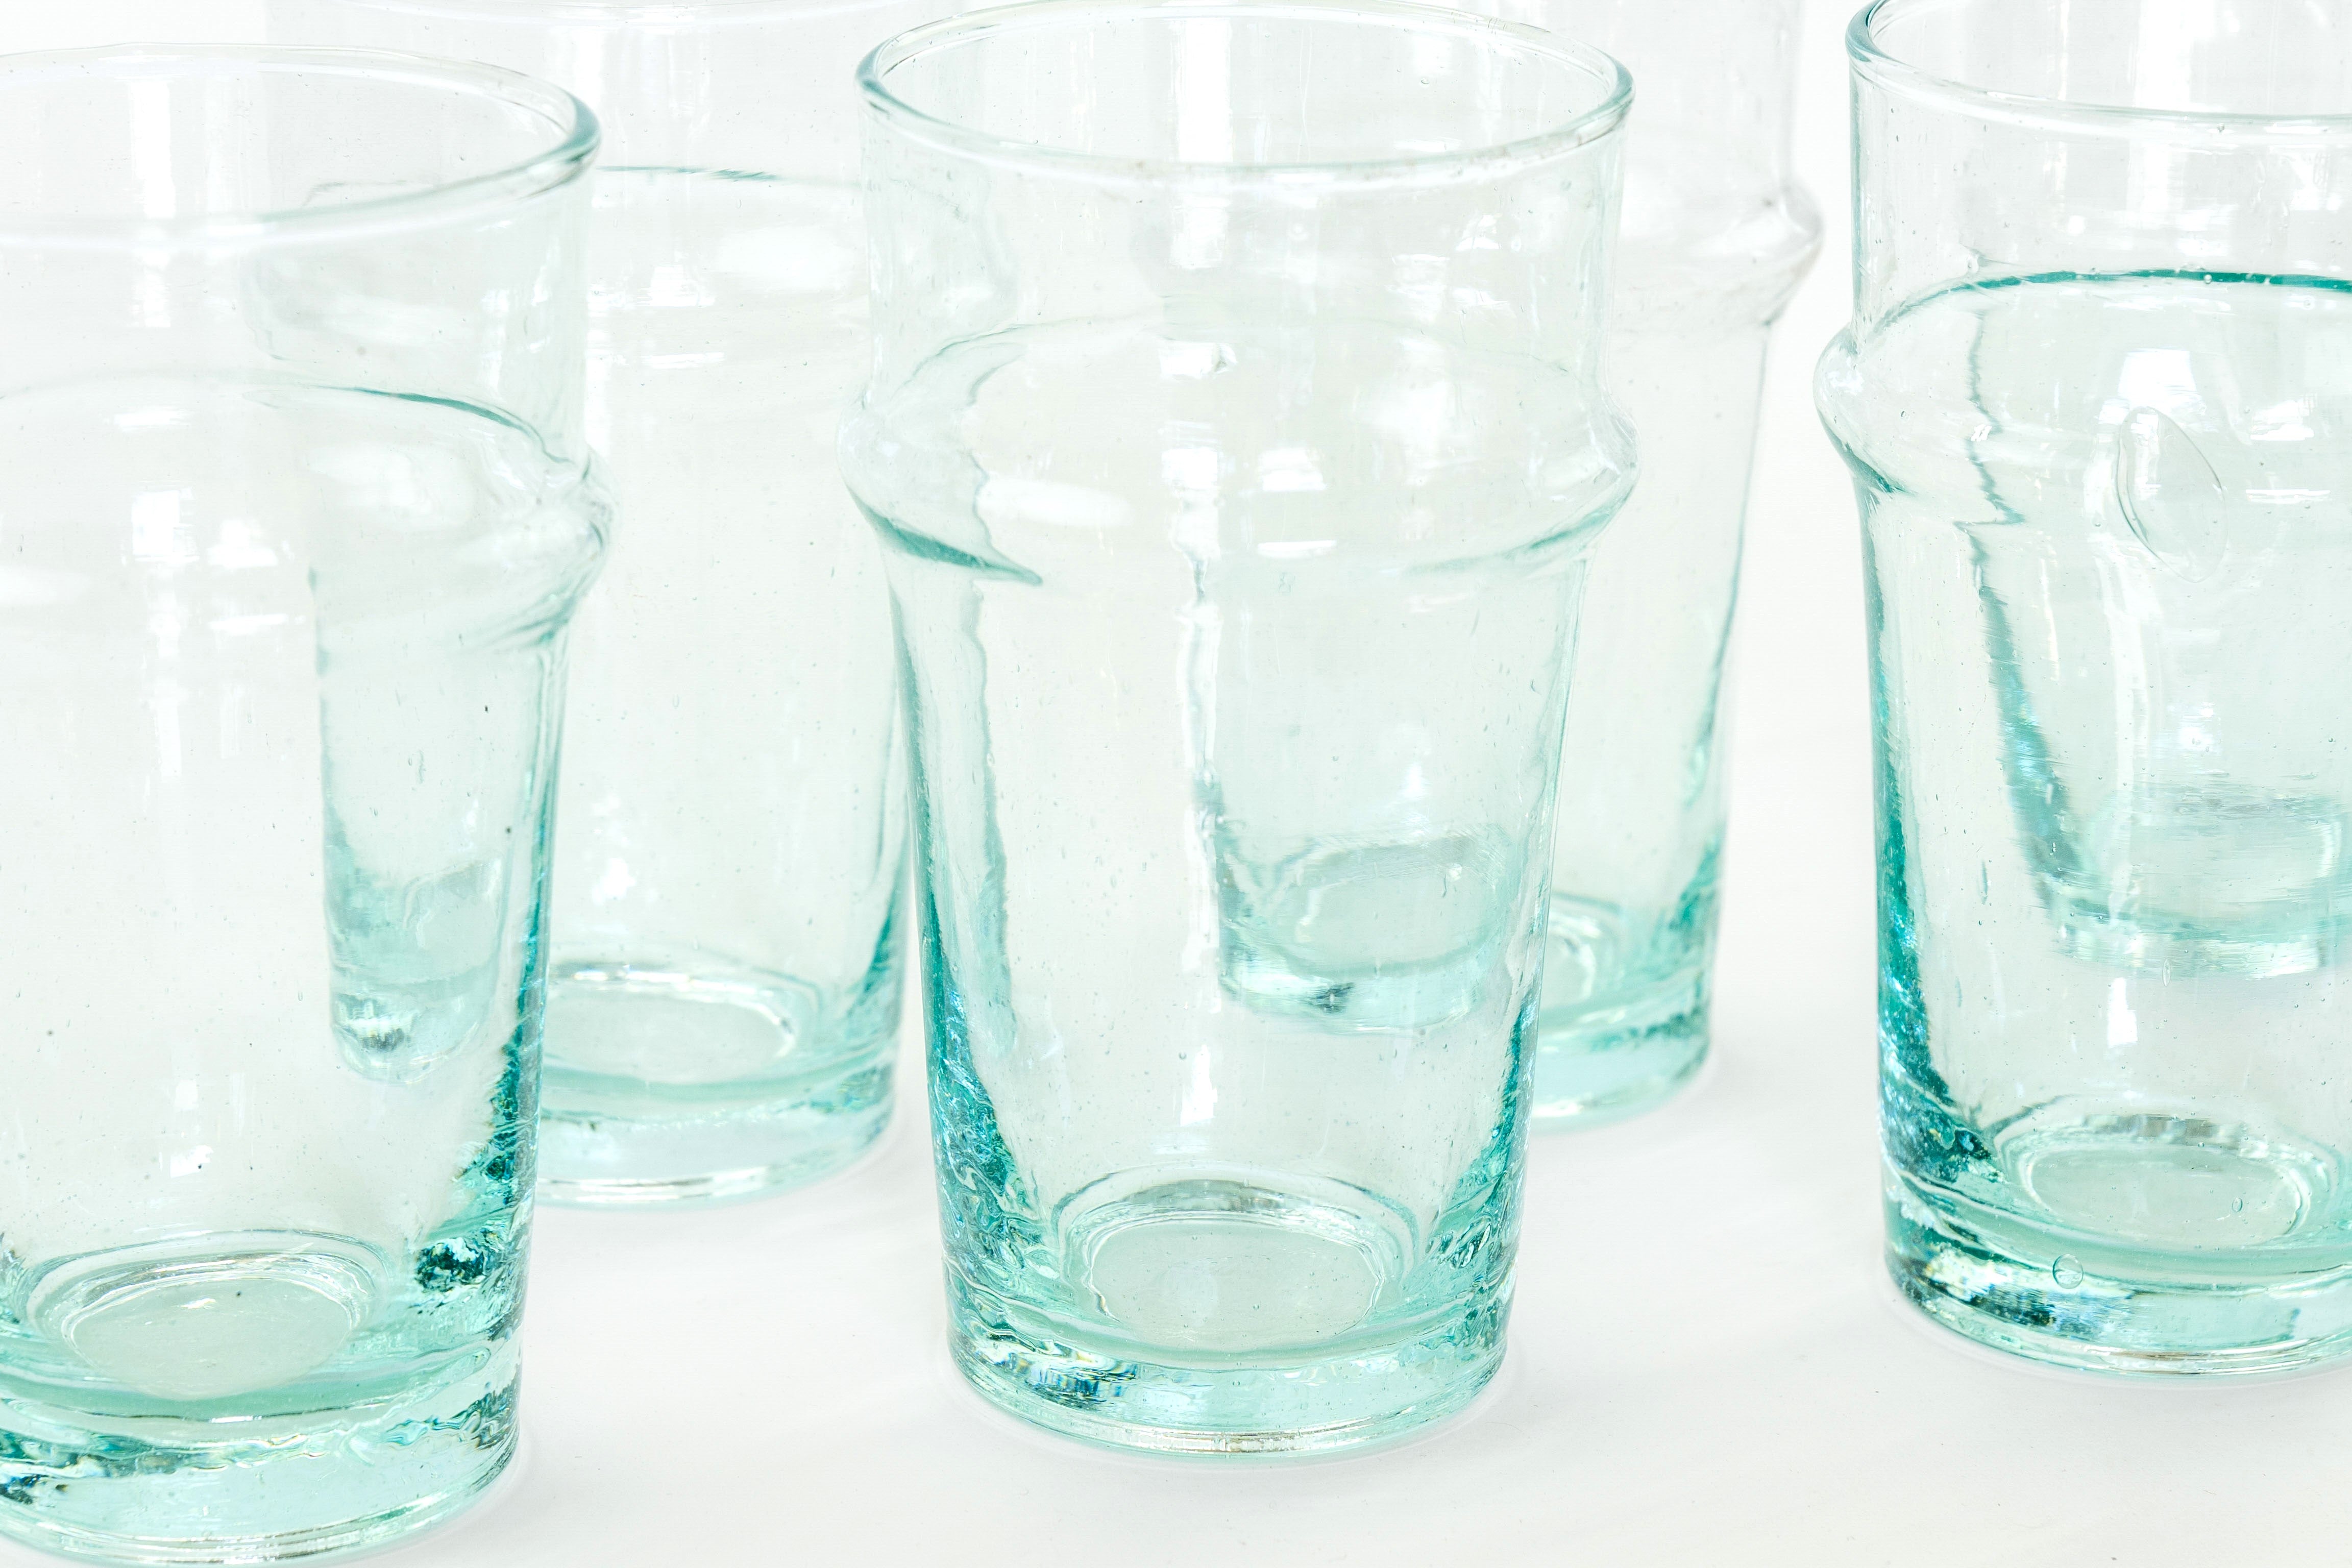 BELDI TRADITIONAL GLASS LARGE set of 6